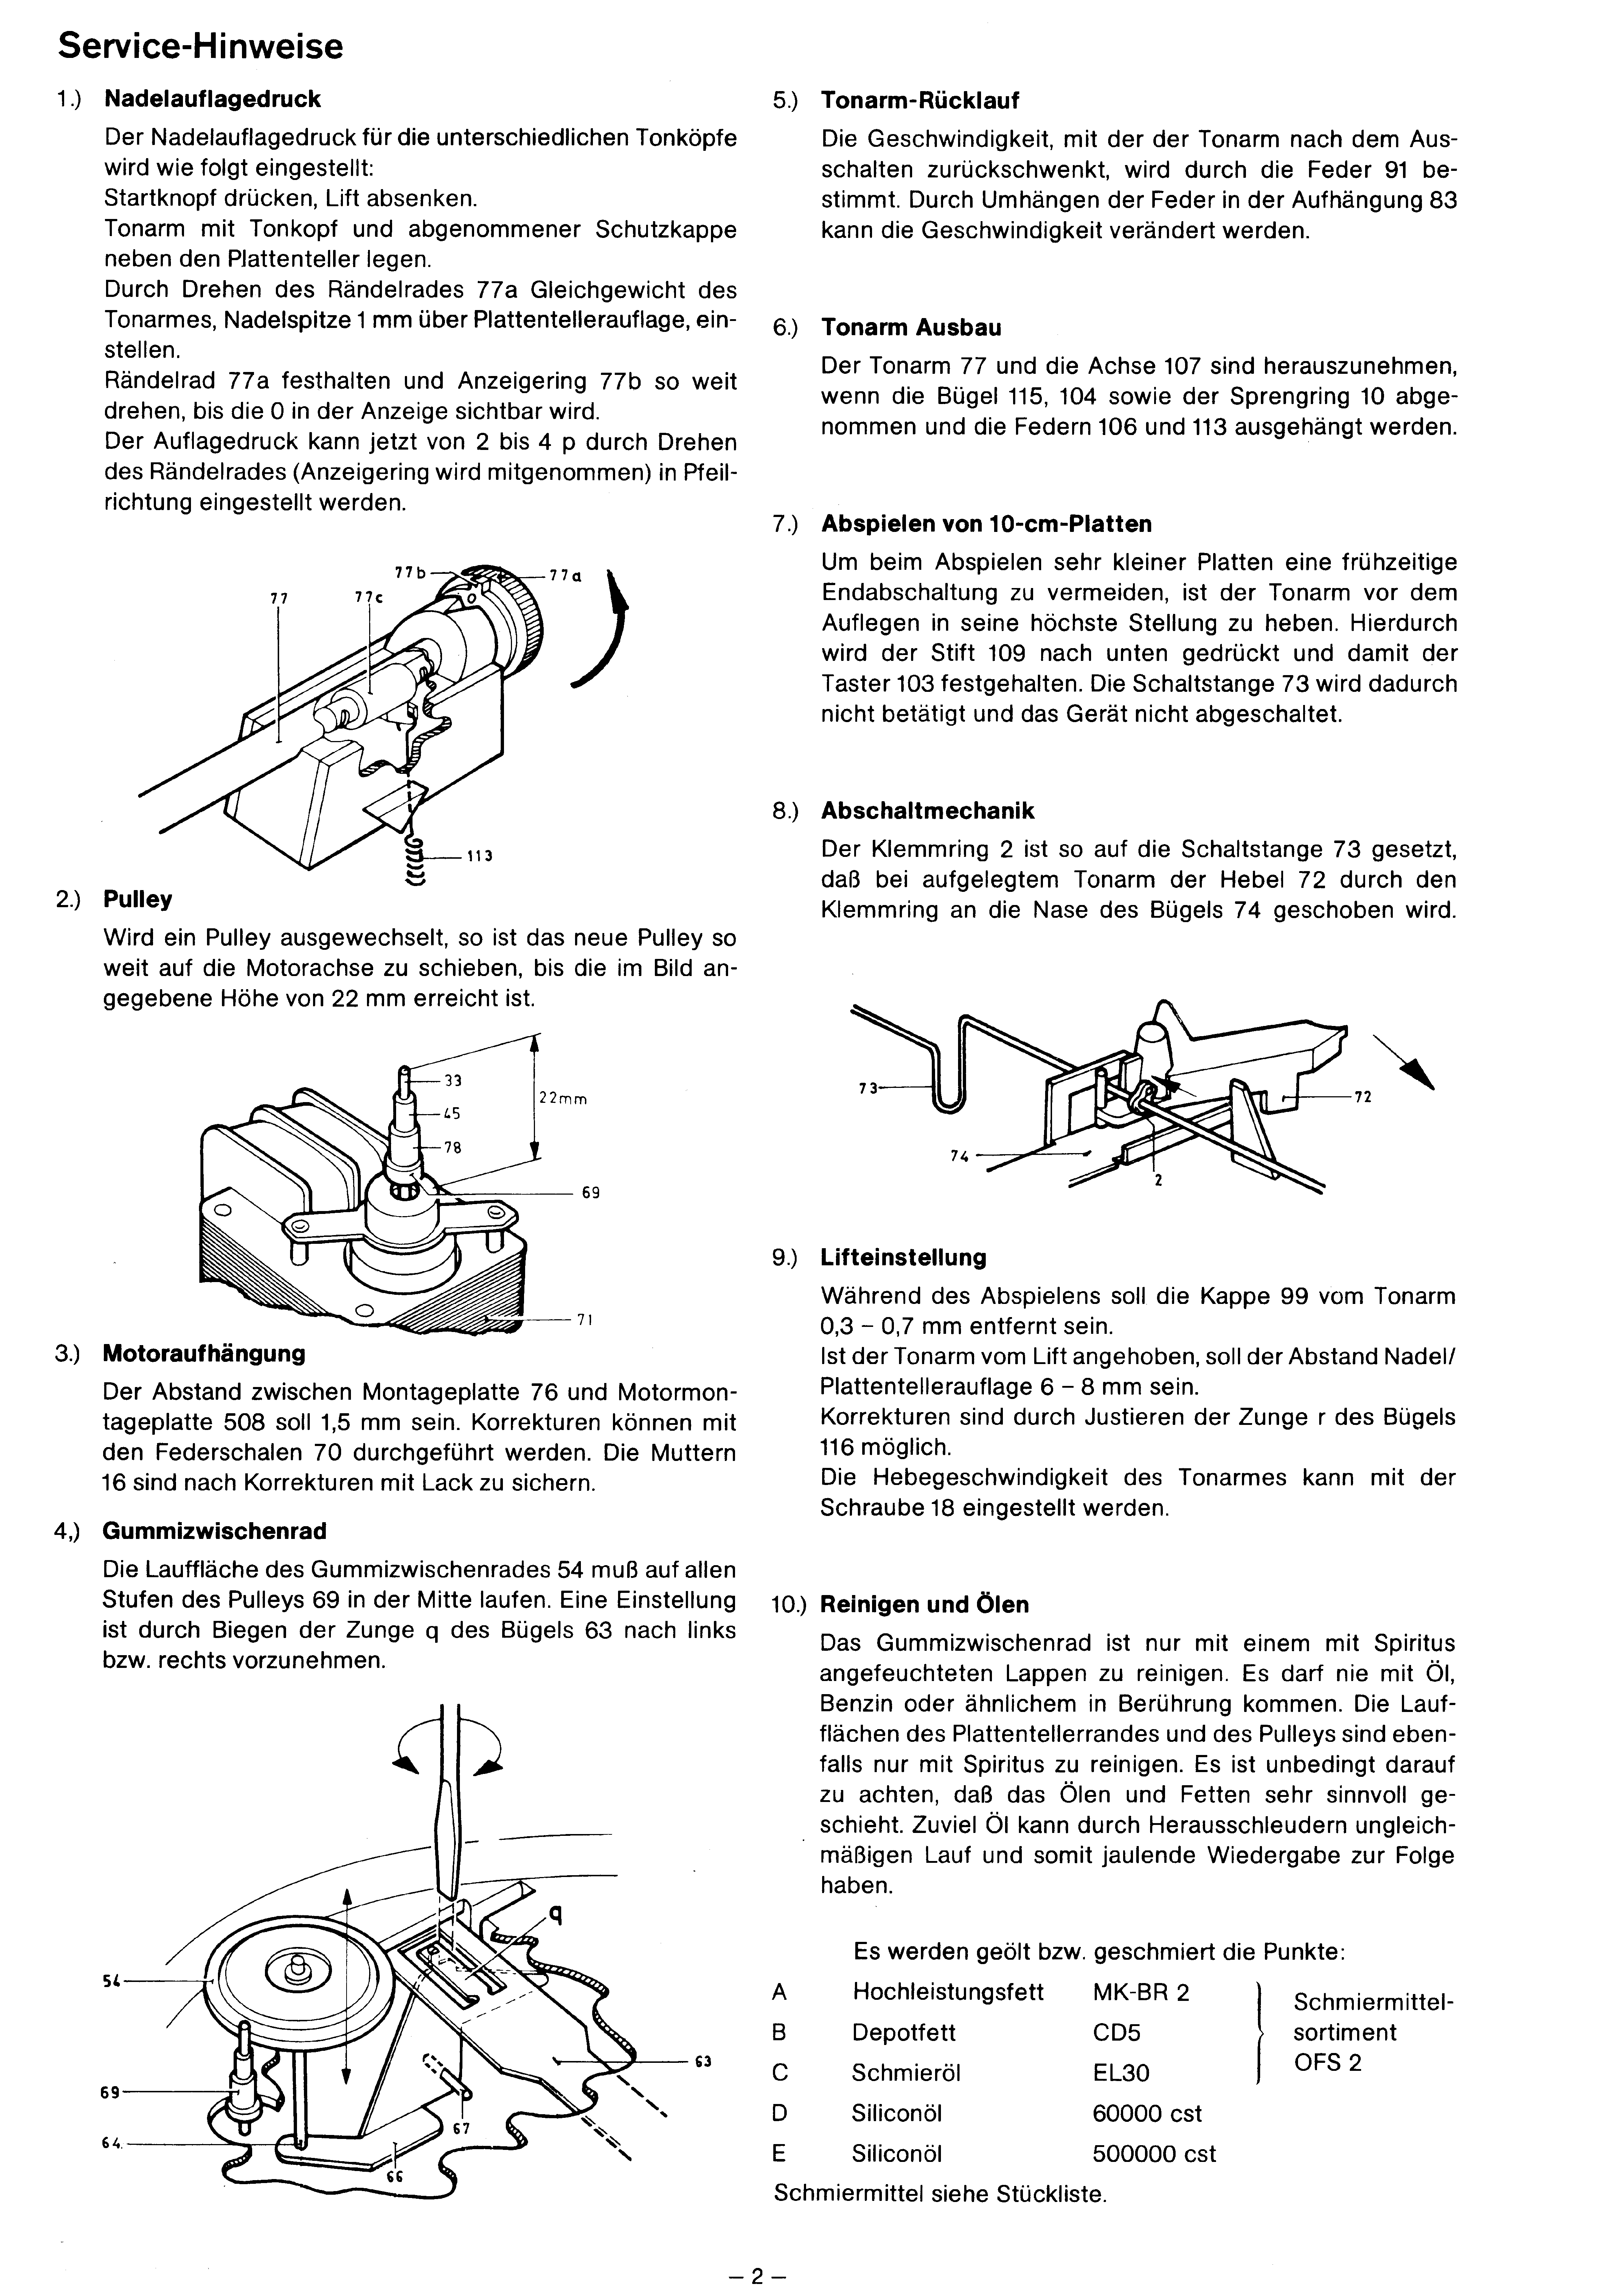 PHILIPS PLATTENSPIELER MIT STEREOVERSTAERKER 22GF705 SM service manual (2nd page)